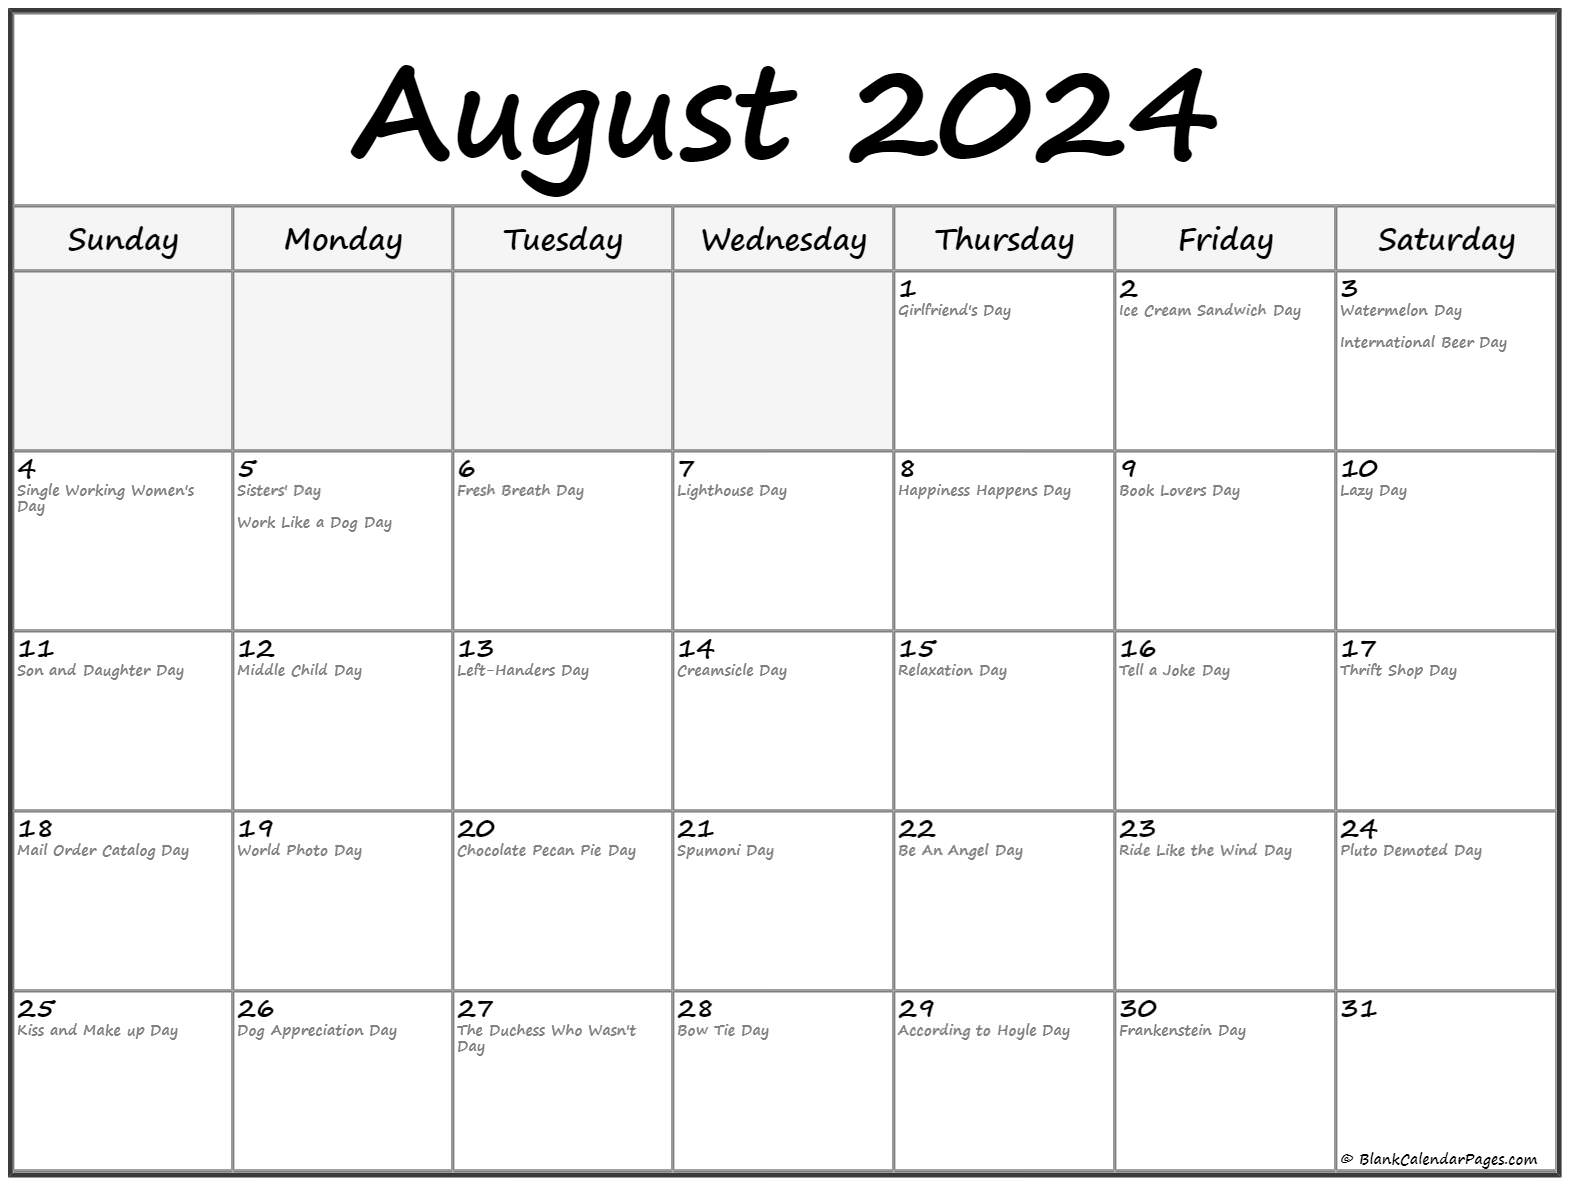 August 2020 calendar with holidays